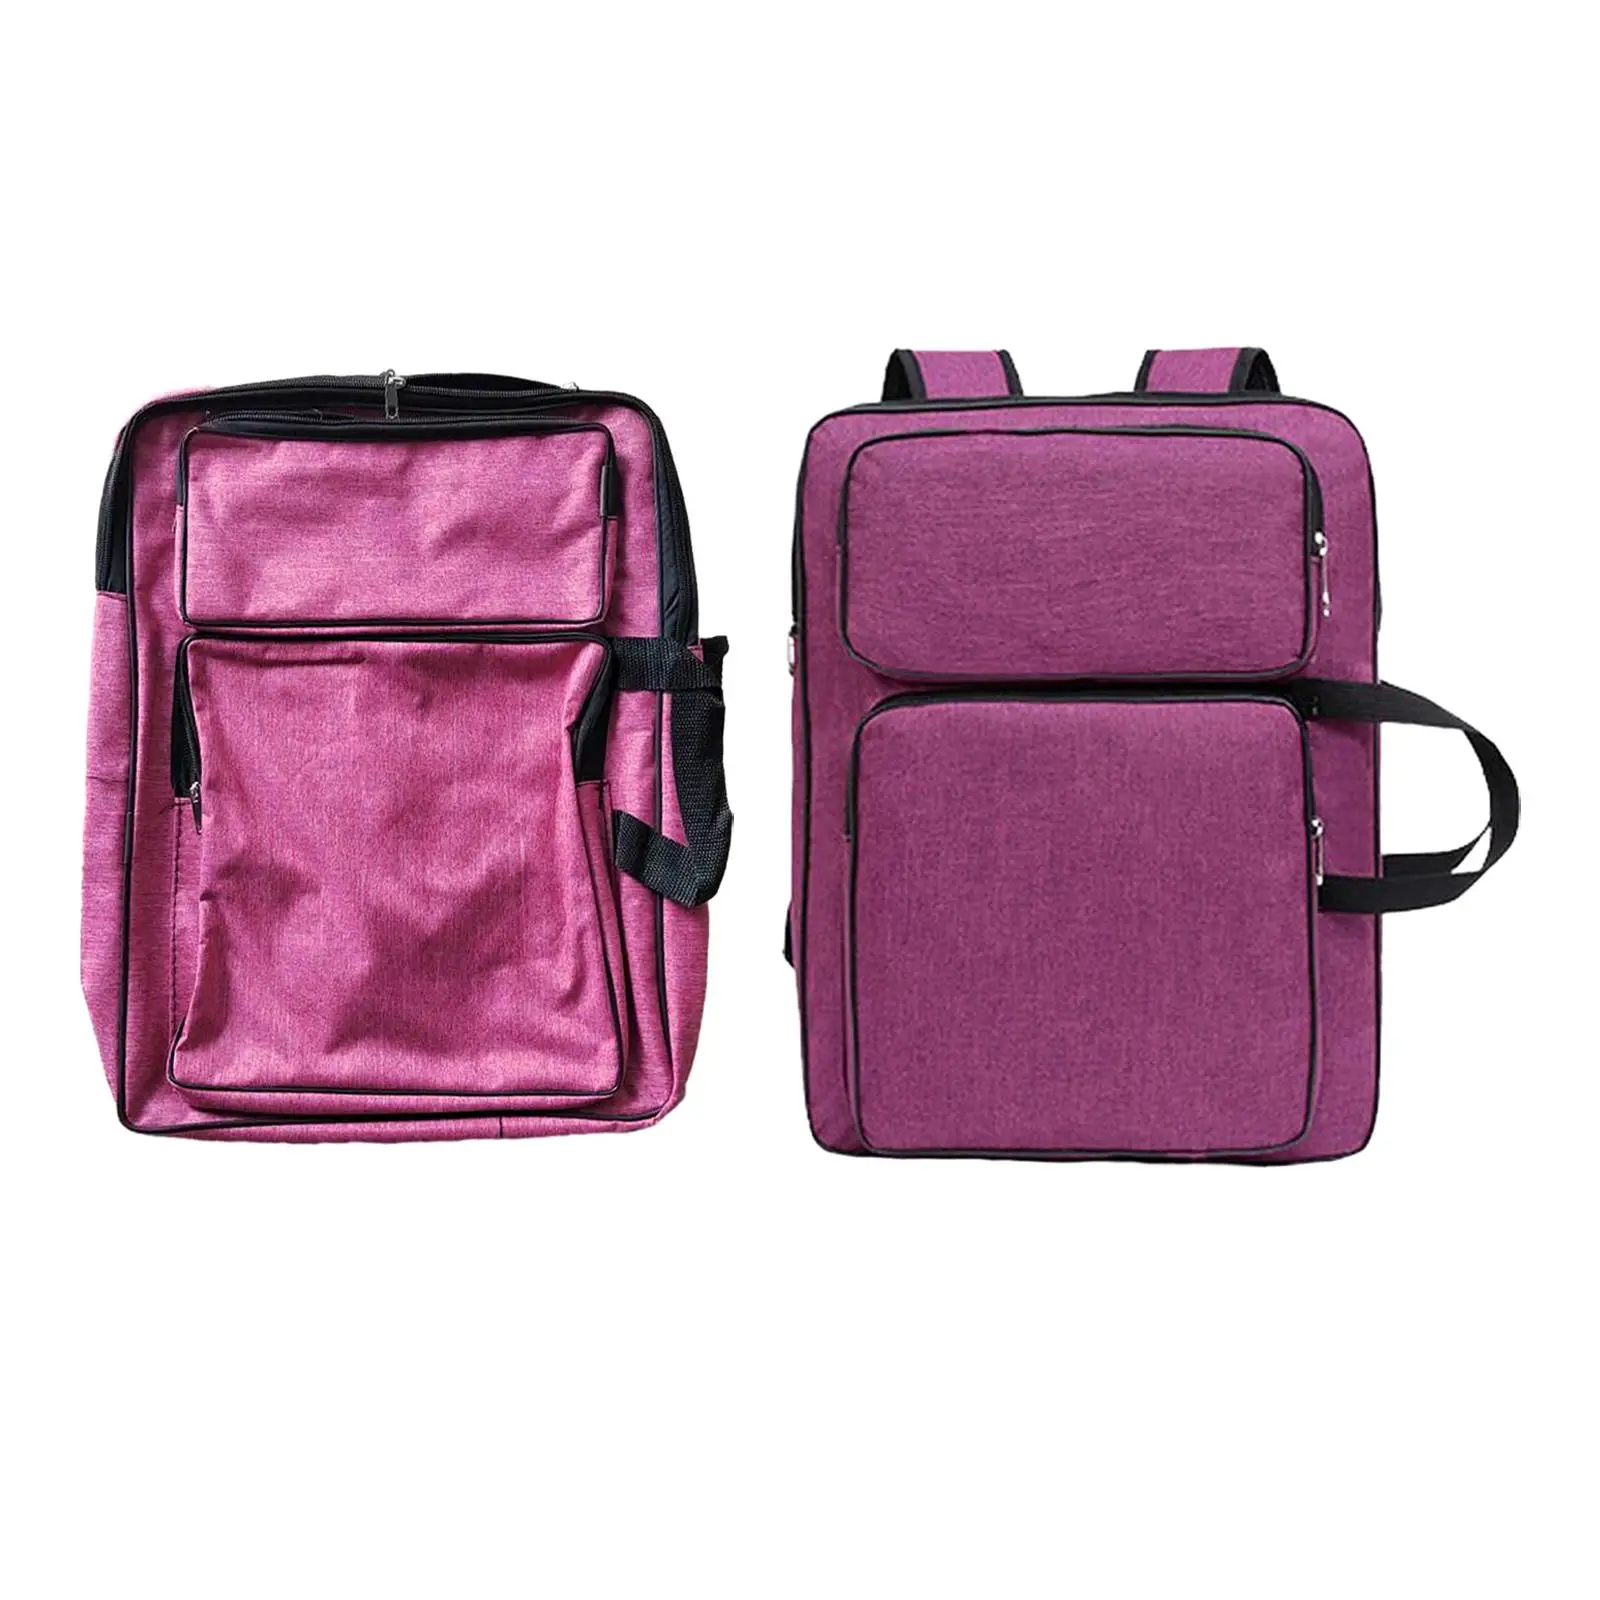 Art Portfolio Case Sketch Bag Oxford Bags Travel Tote Bag Carrying Bag Artists